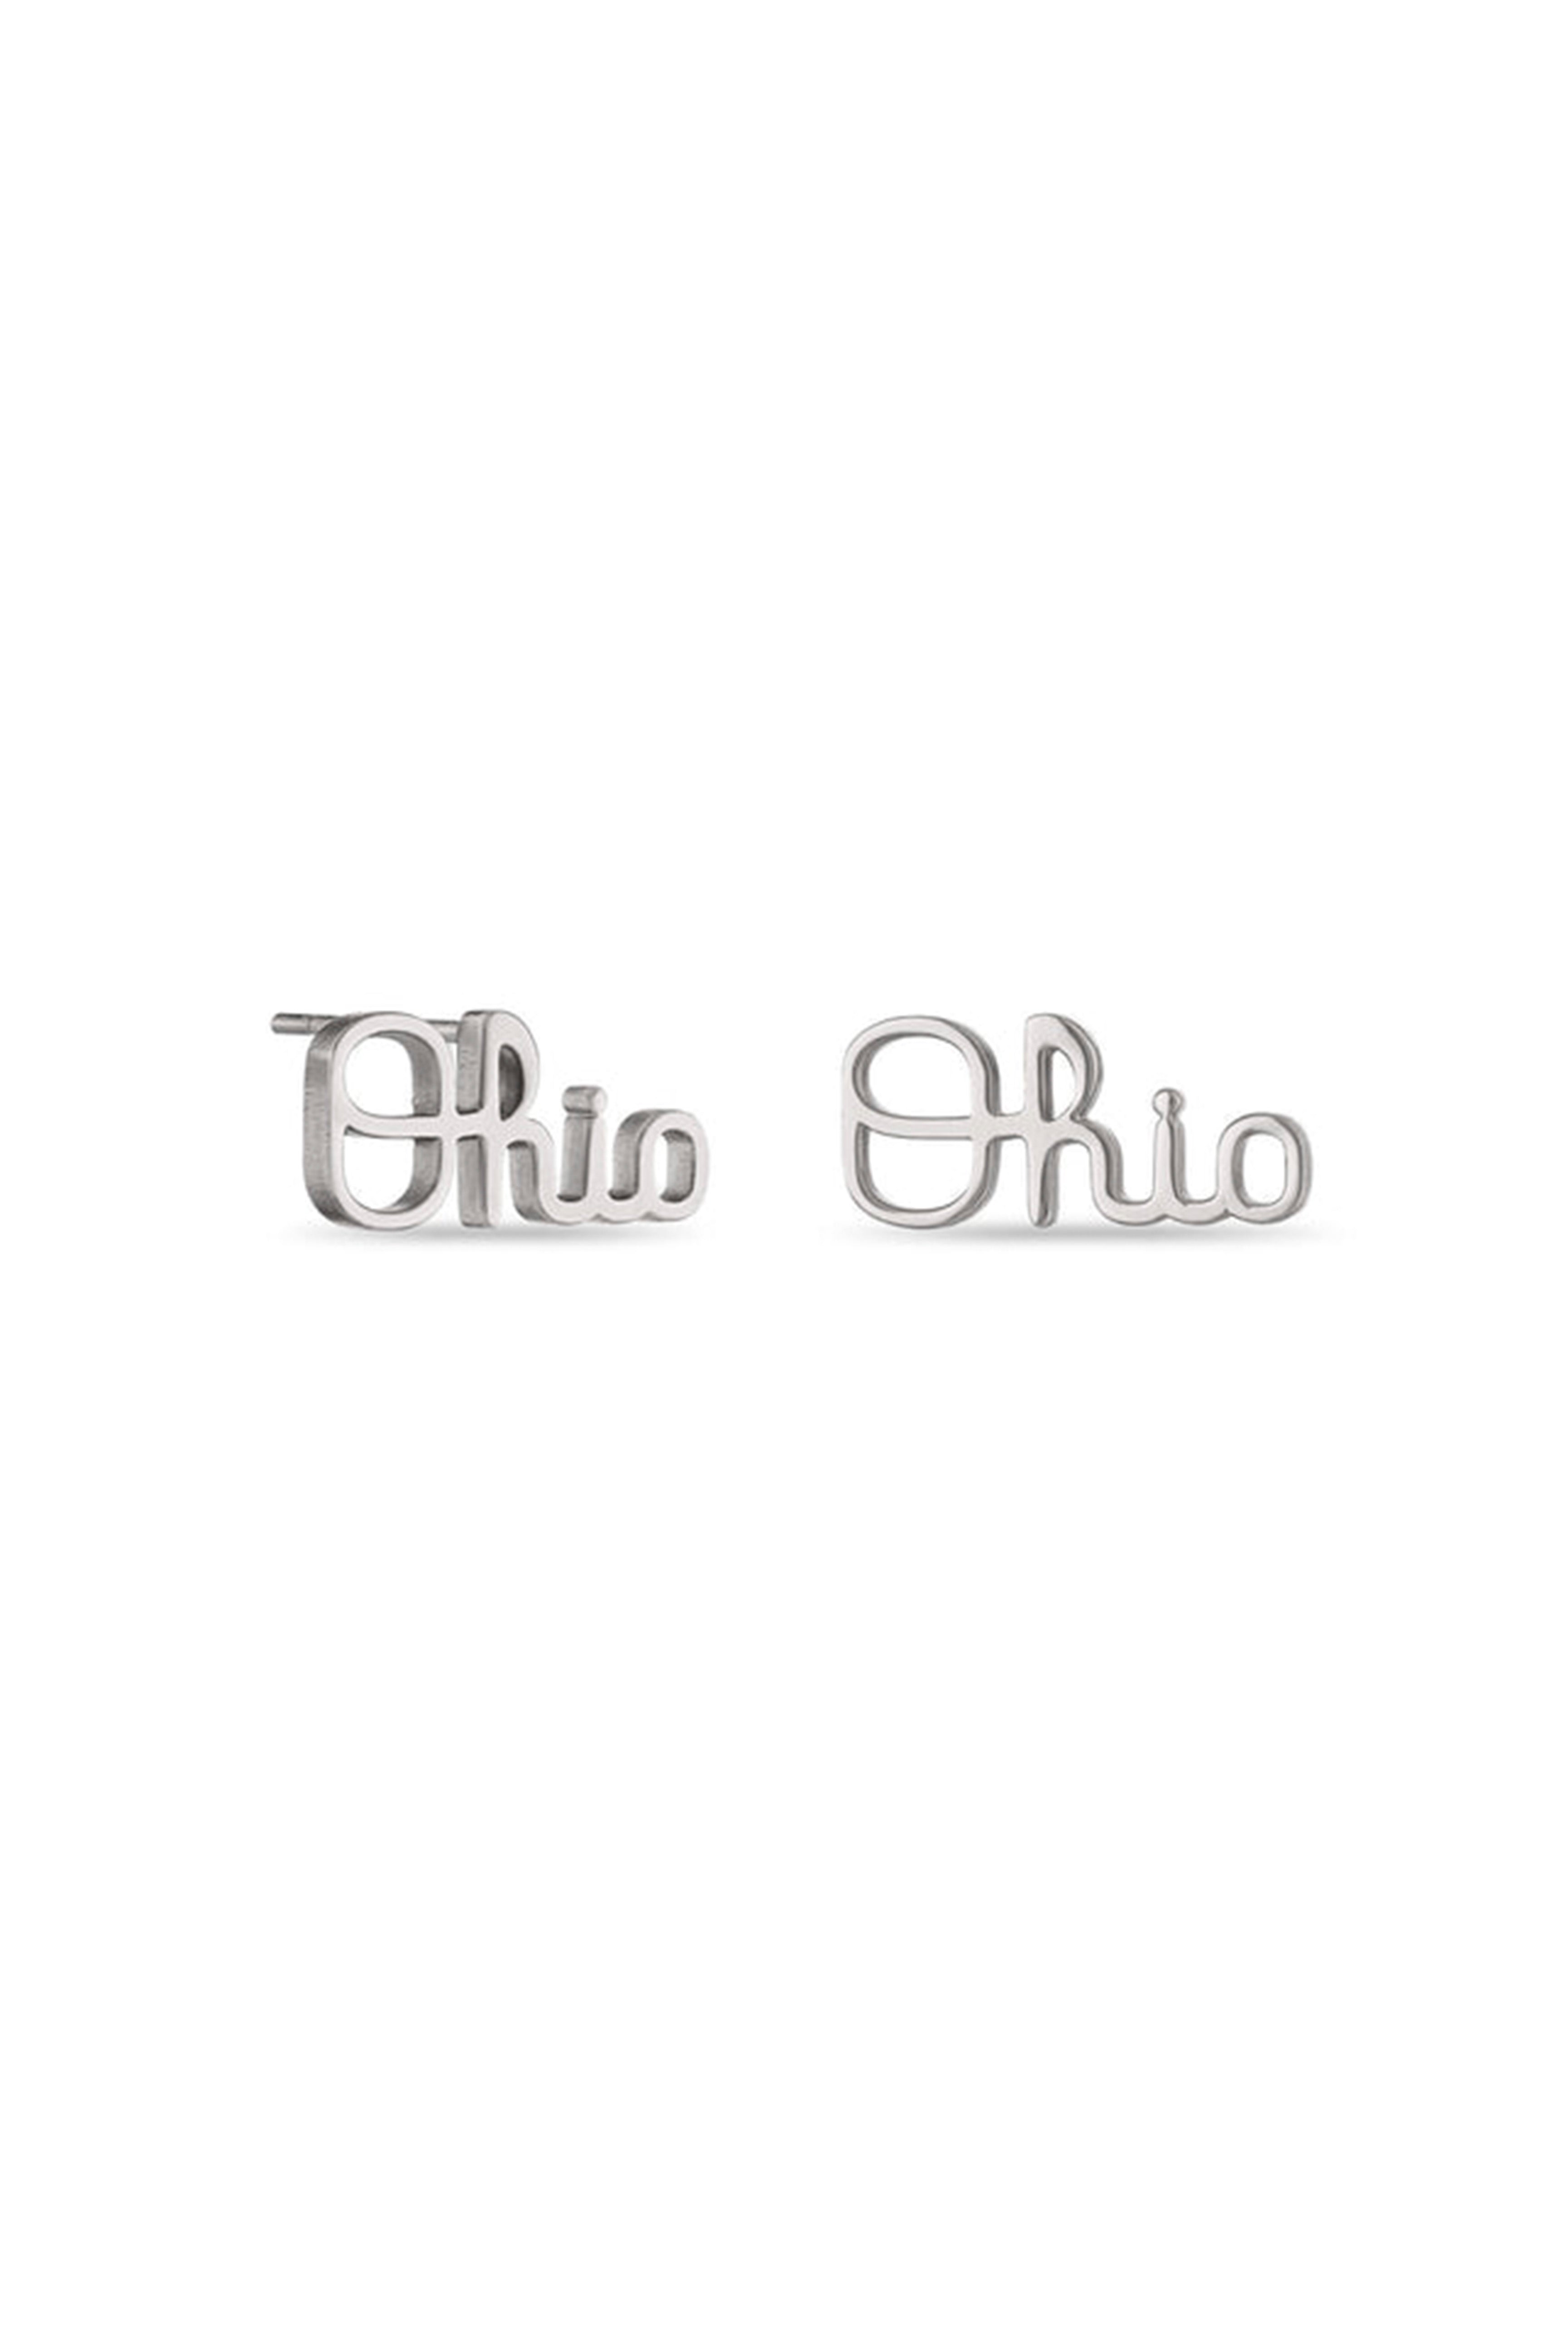 5420 - Ohio State Script Ohio Stud Earrings/Silver